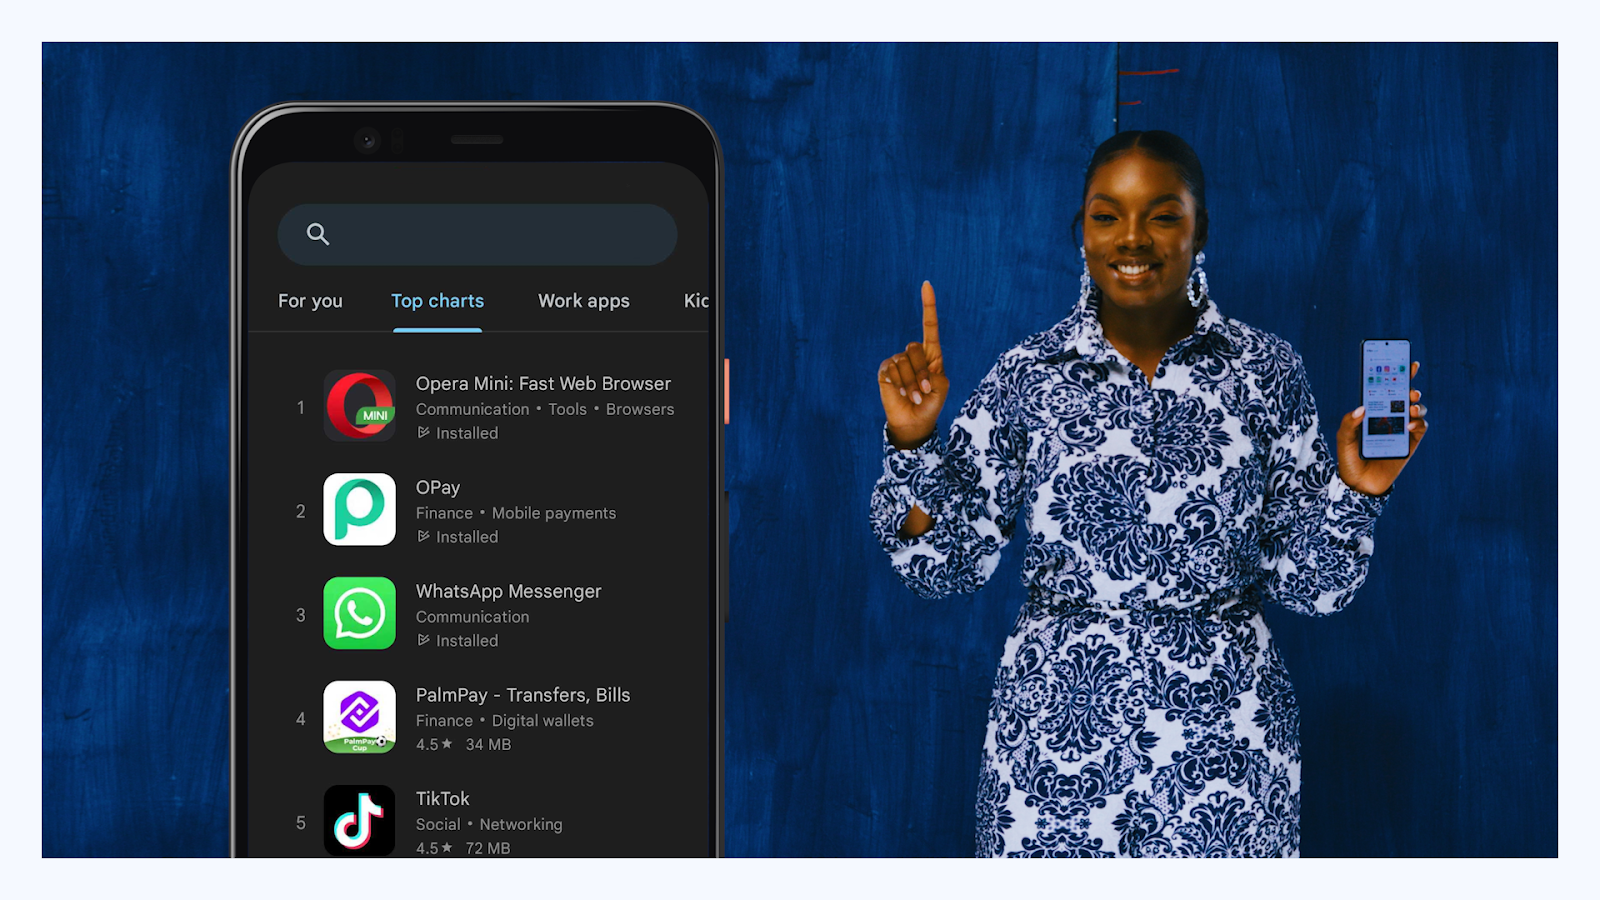 Opera Mini becomes Most downloaded app in Kenya 